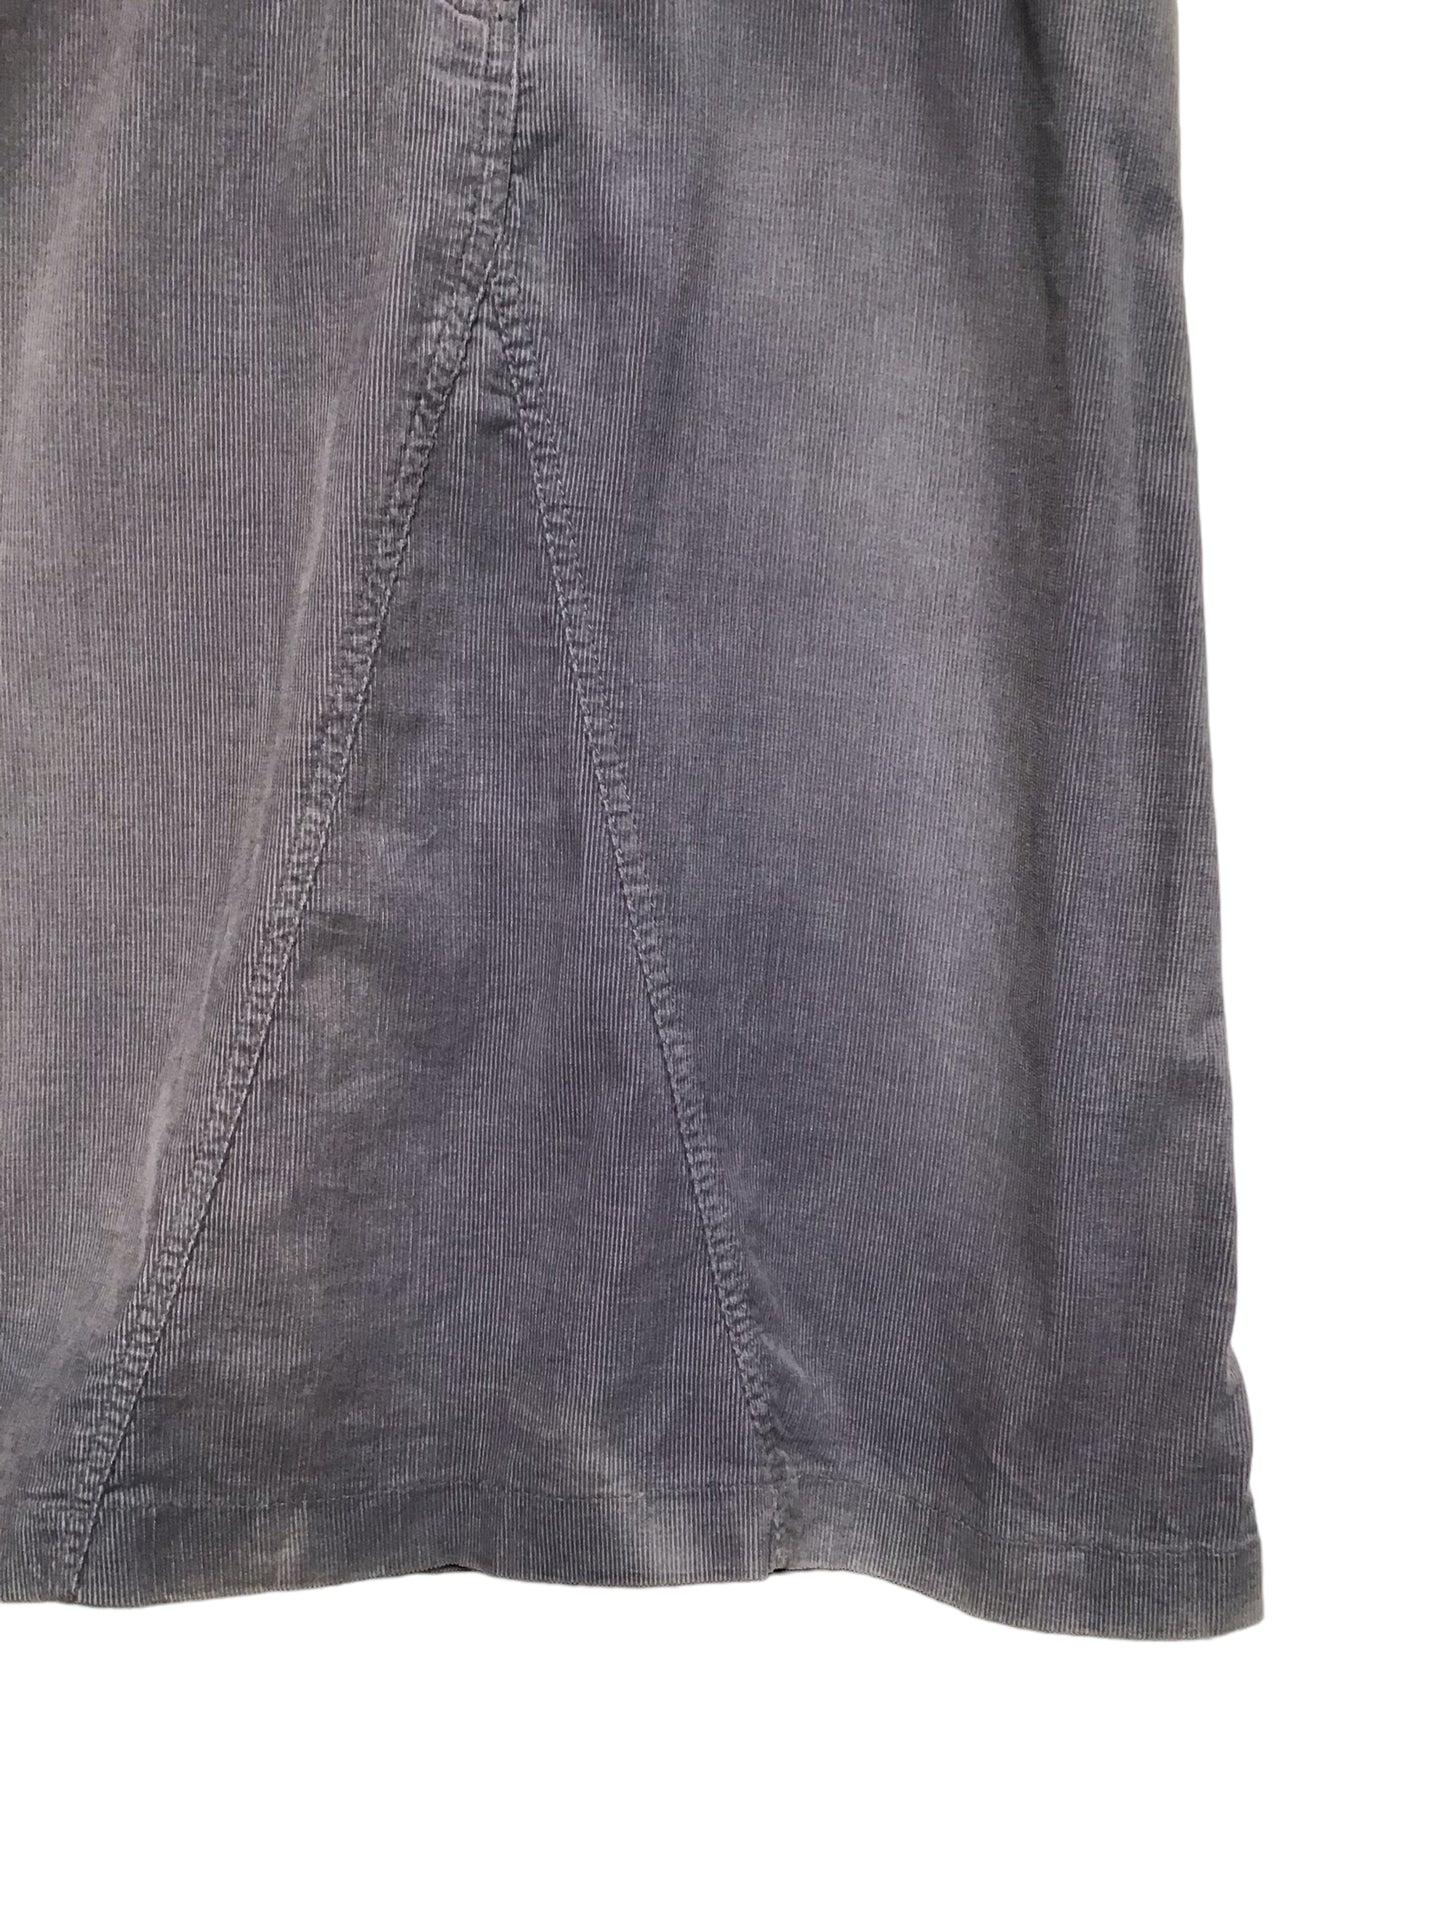 Corduroy Skirt (Size L)